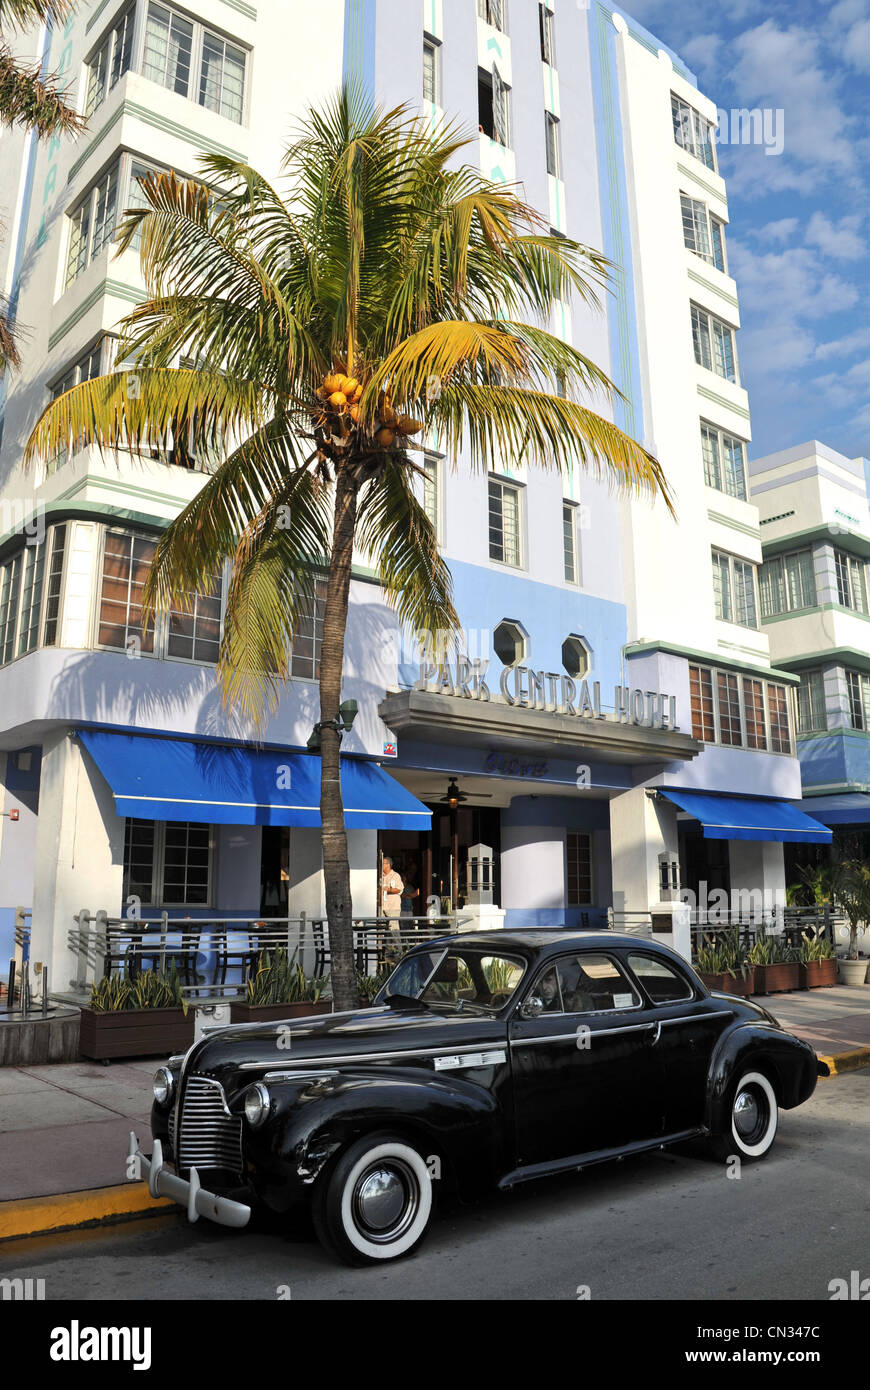 Park Central Hotel, South Beach, Miami, Floride, USA Banque D'Images